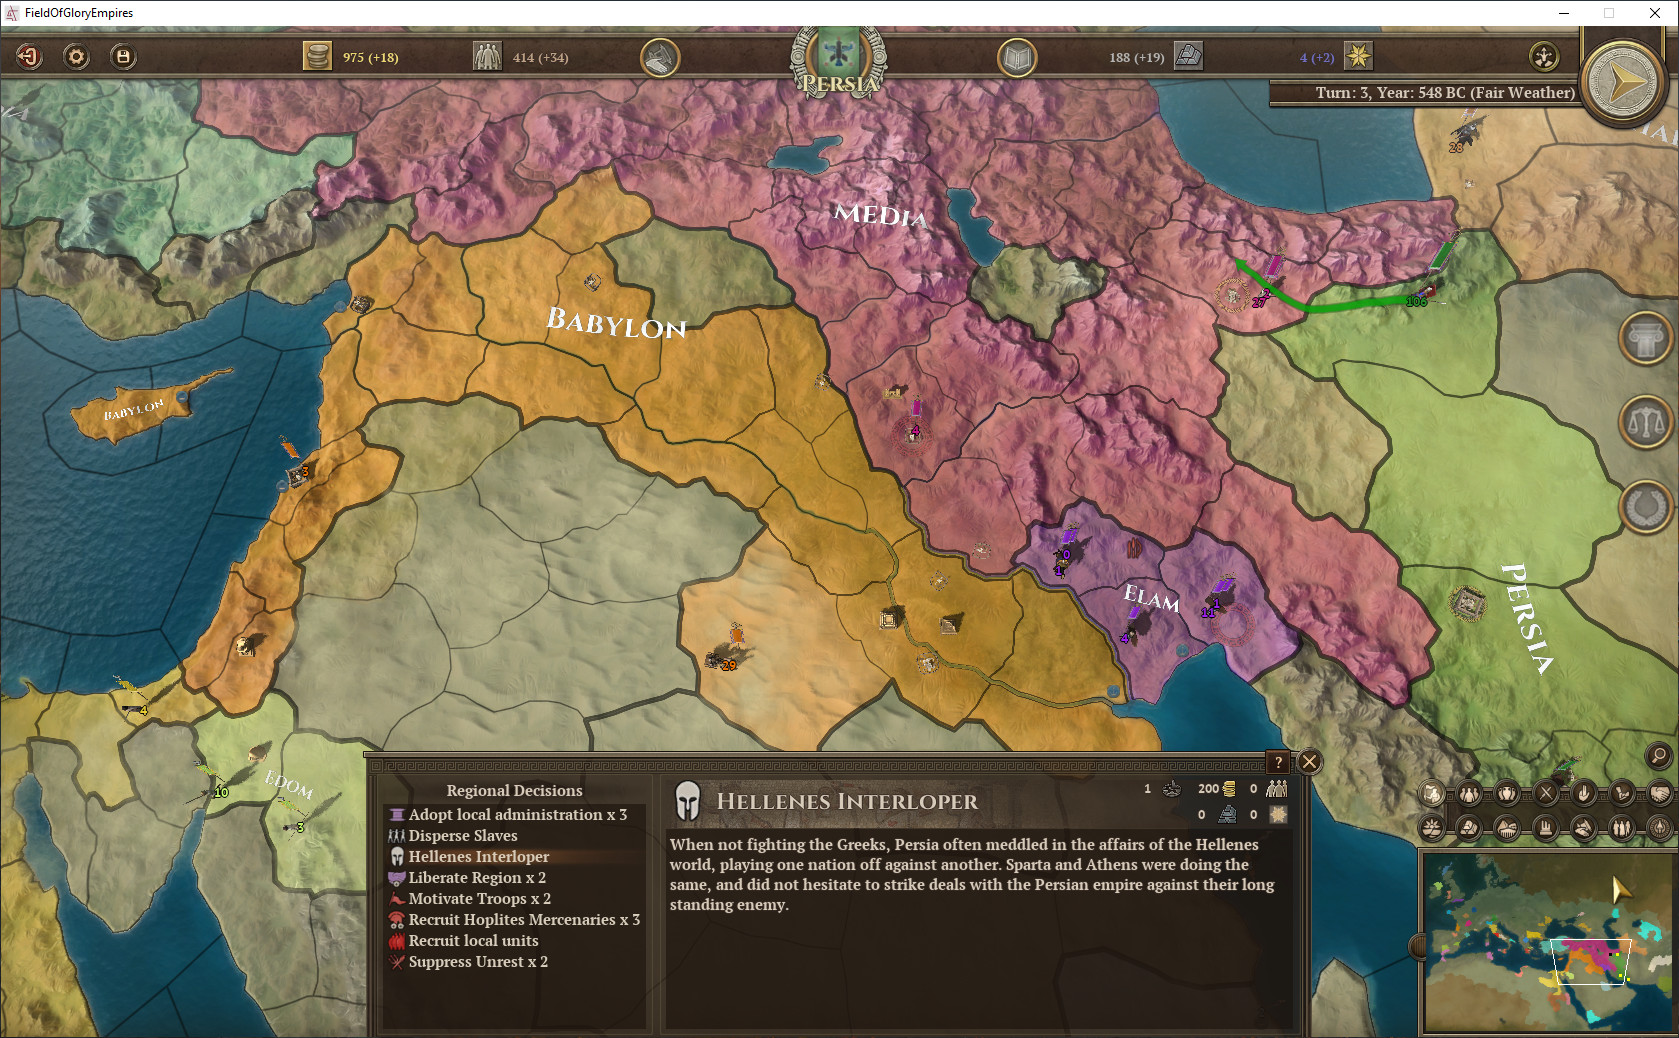 Field of Glory: Empires - Persia 550 - 330 BCE screenshot